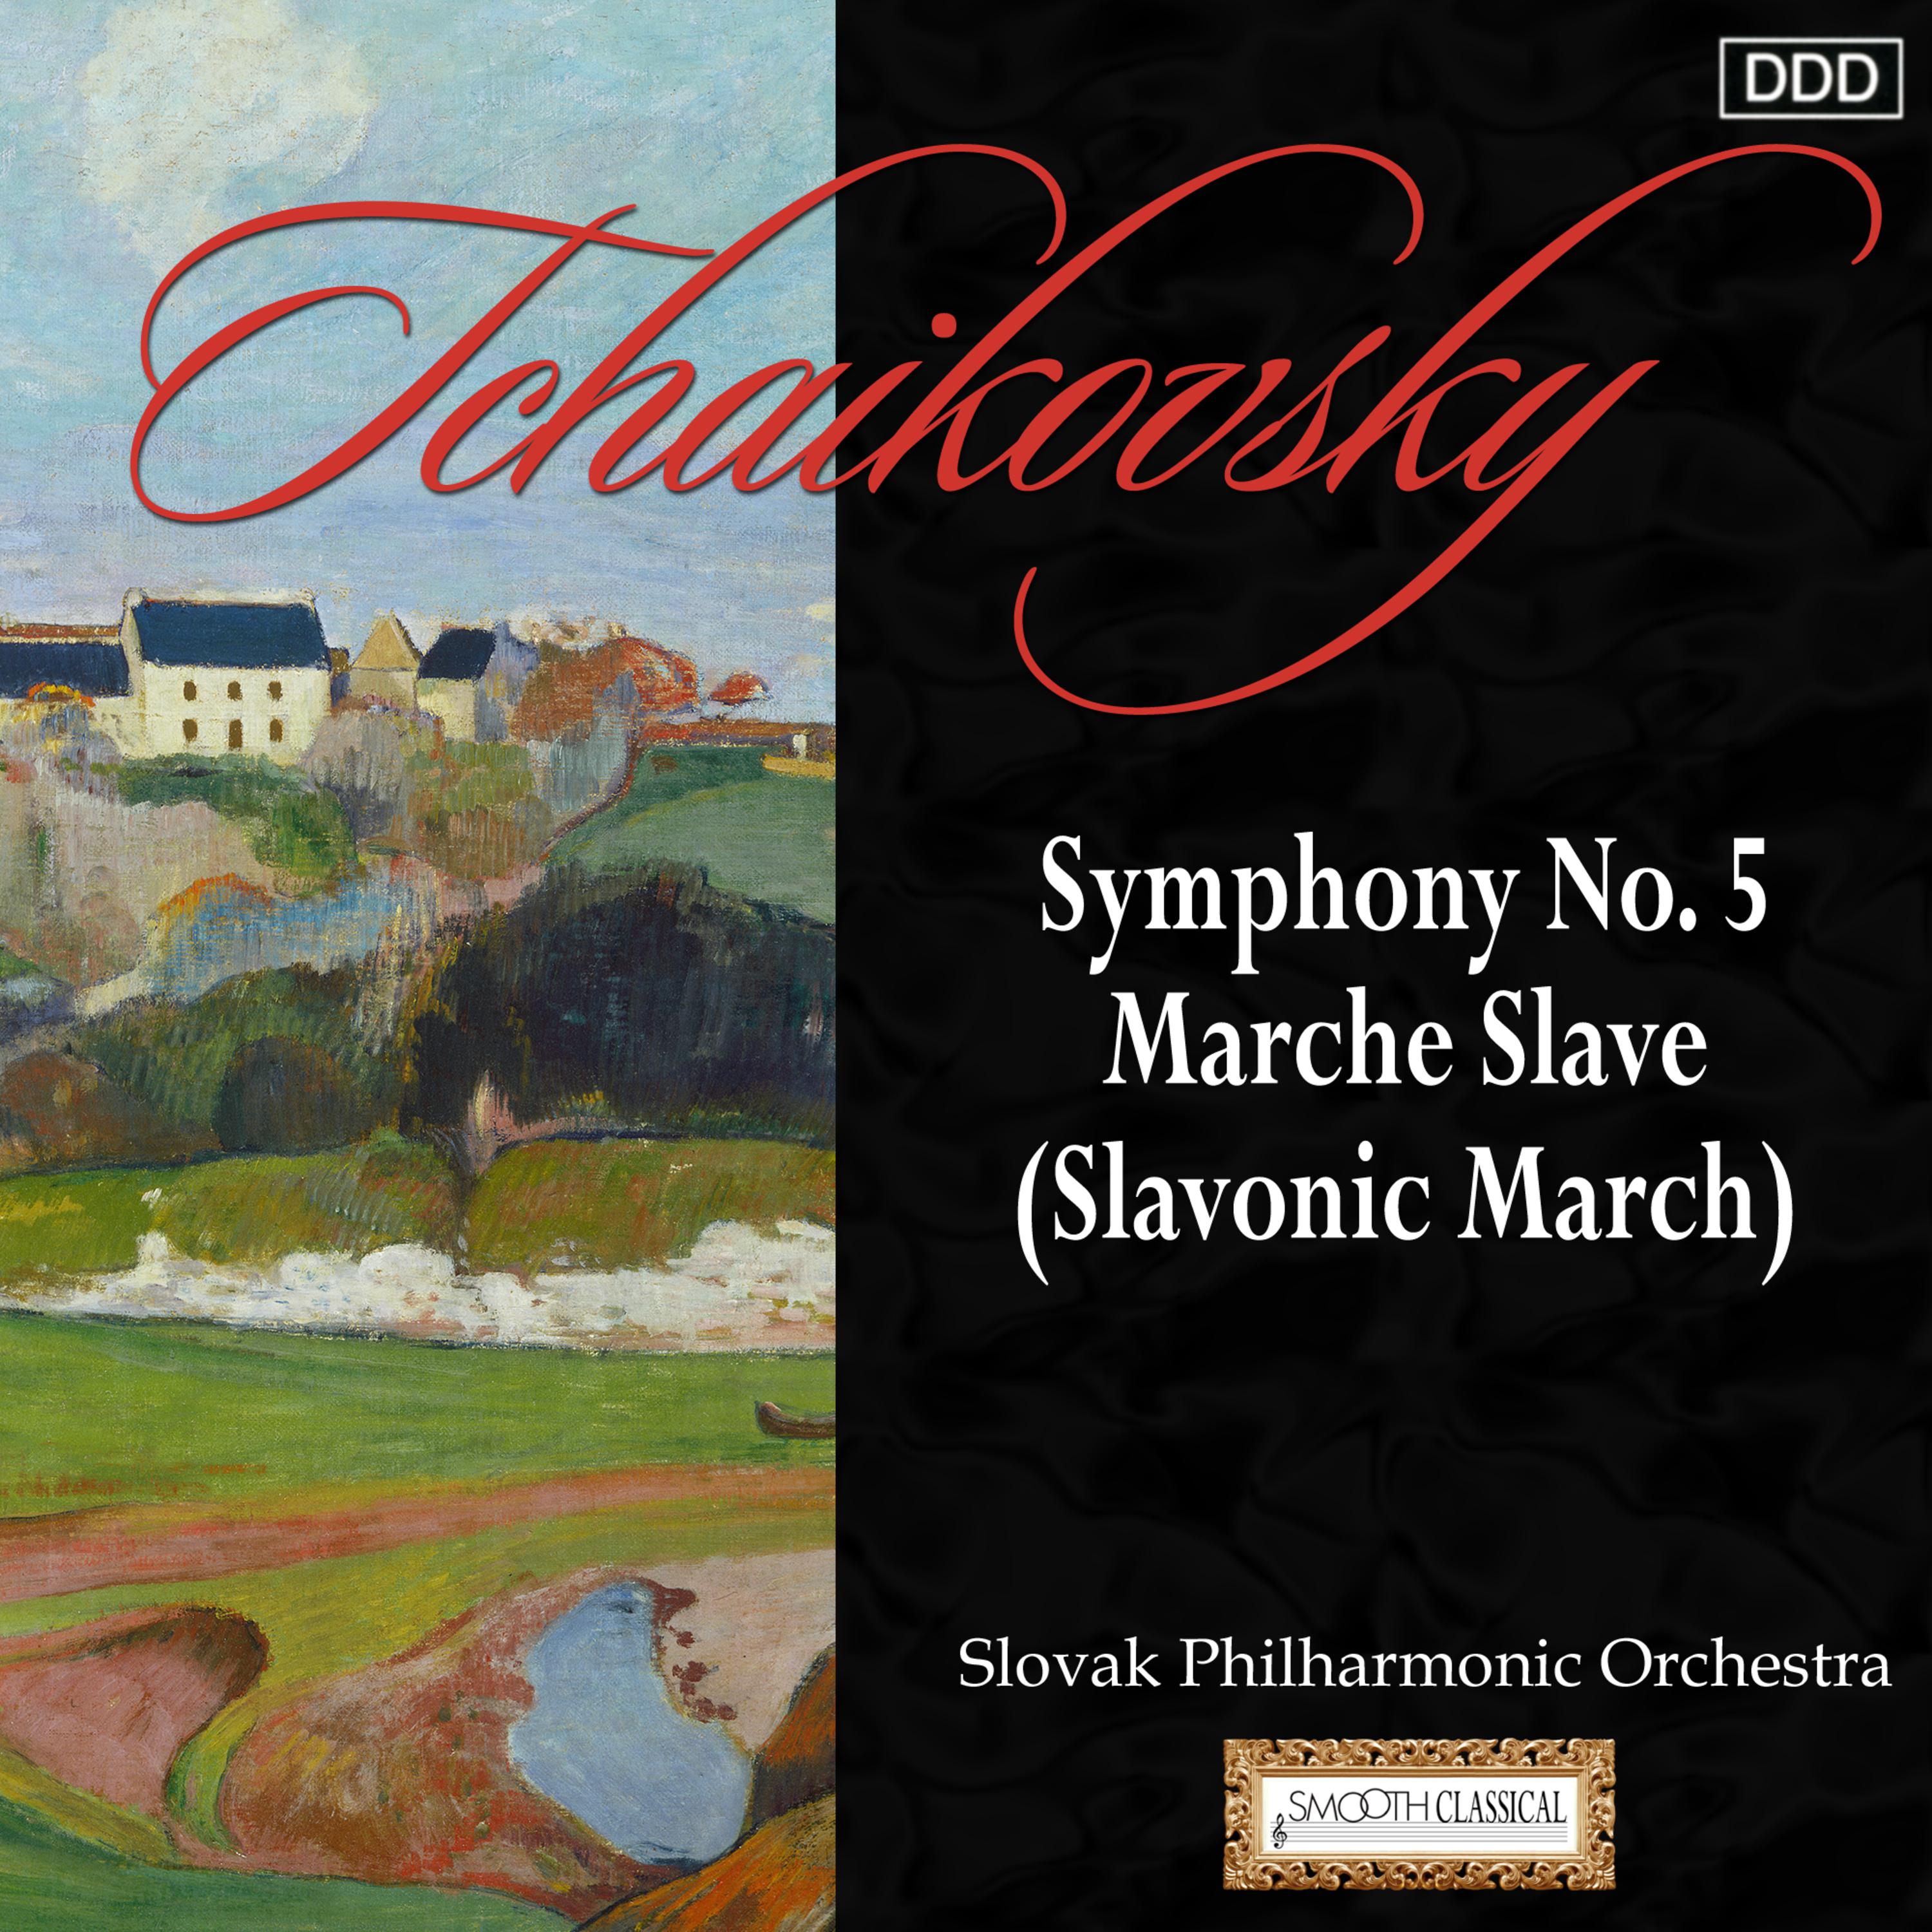 Symphony No. 5 in E Minor, Op. 64, TH 29: III. Valse - Allegro moderato